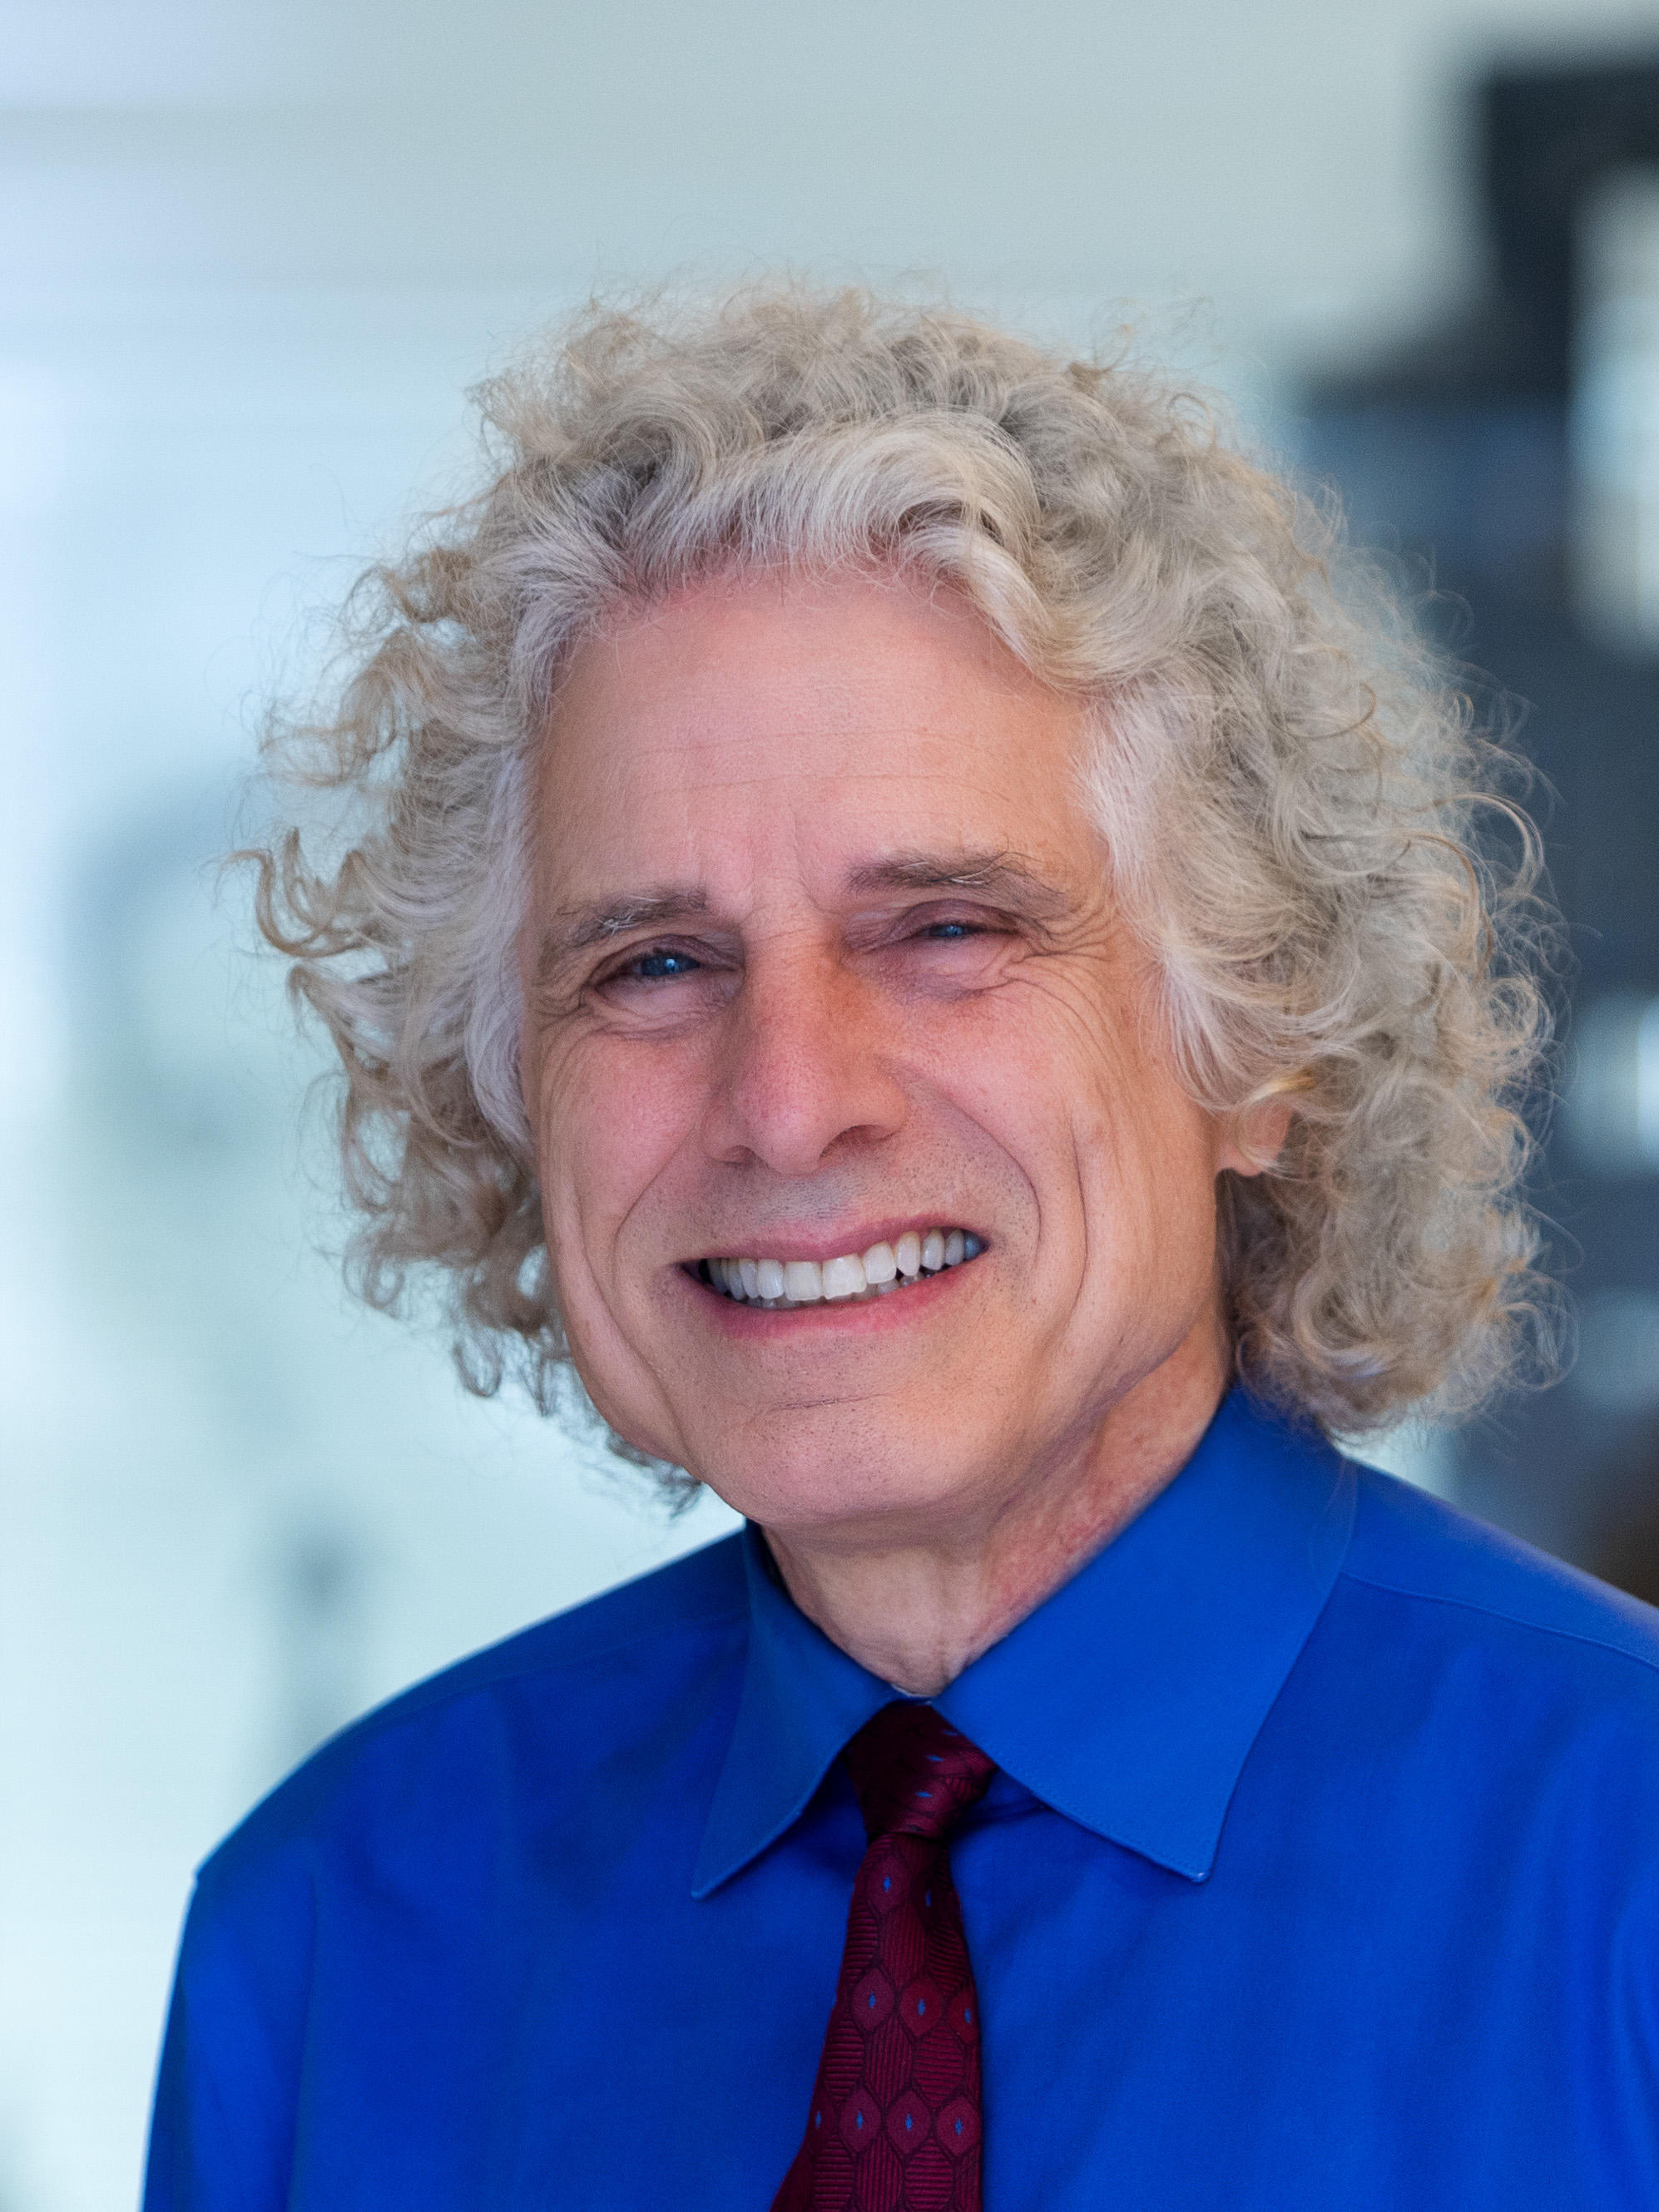 Steven Pinker Portrait By Eric Haynes